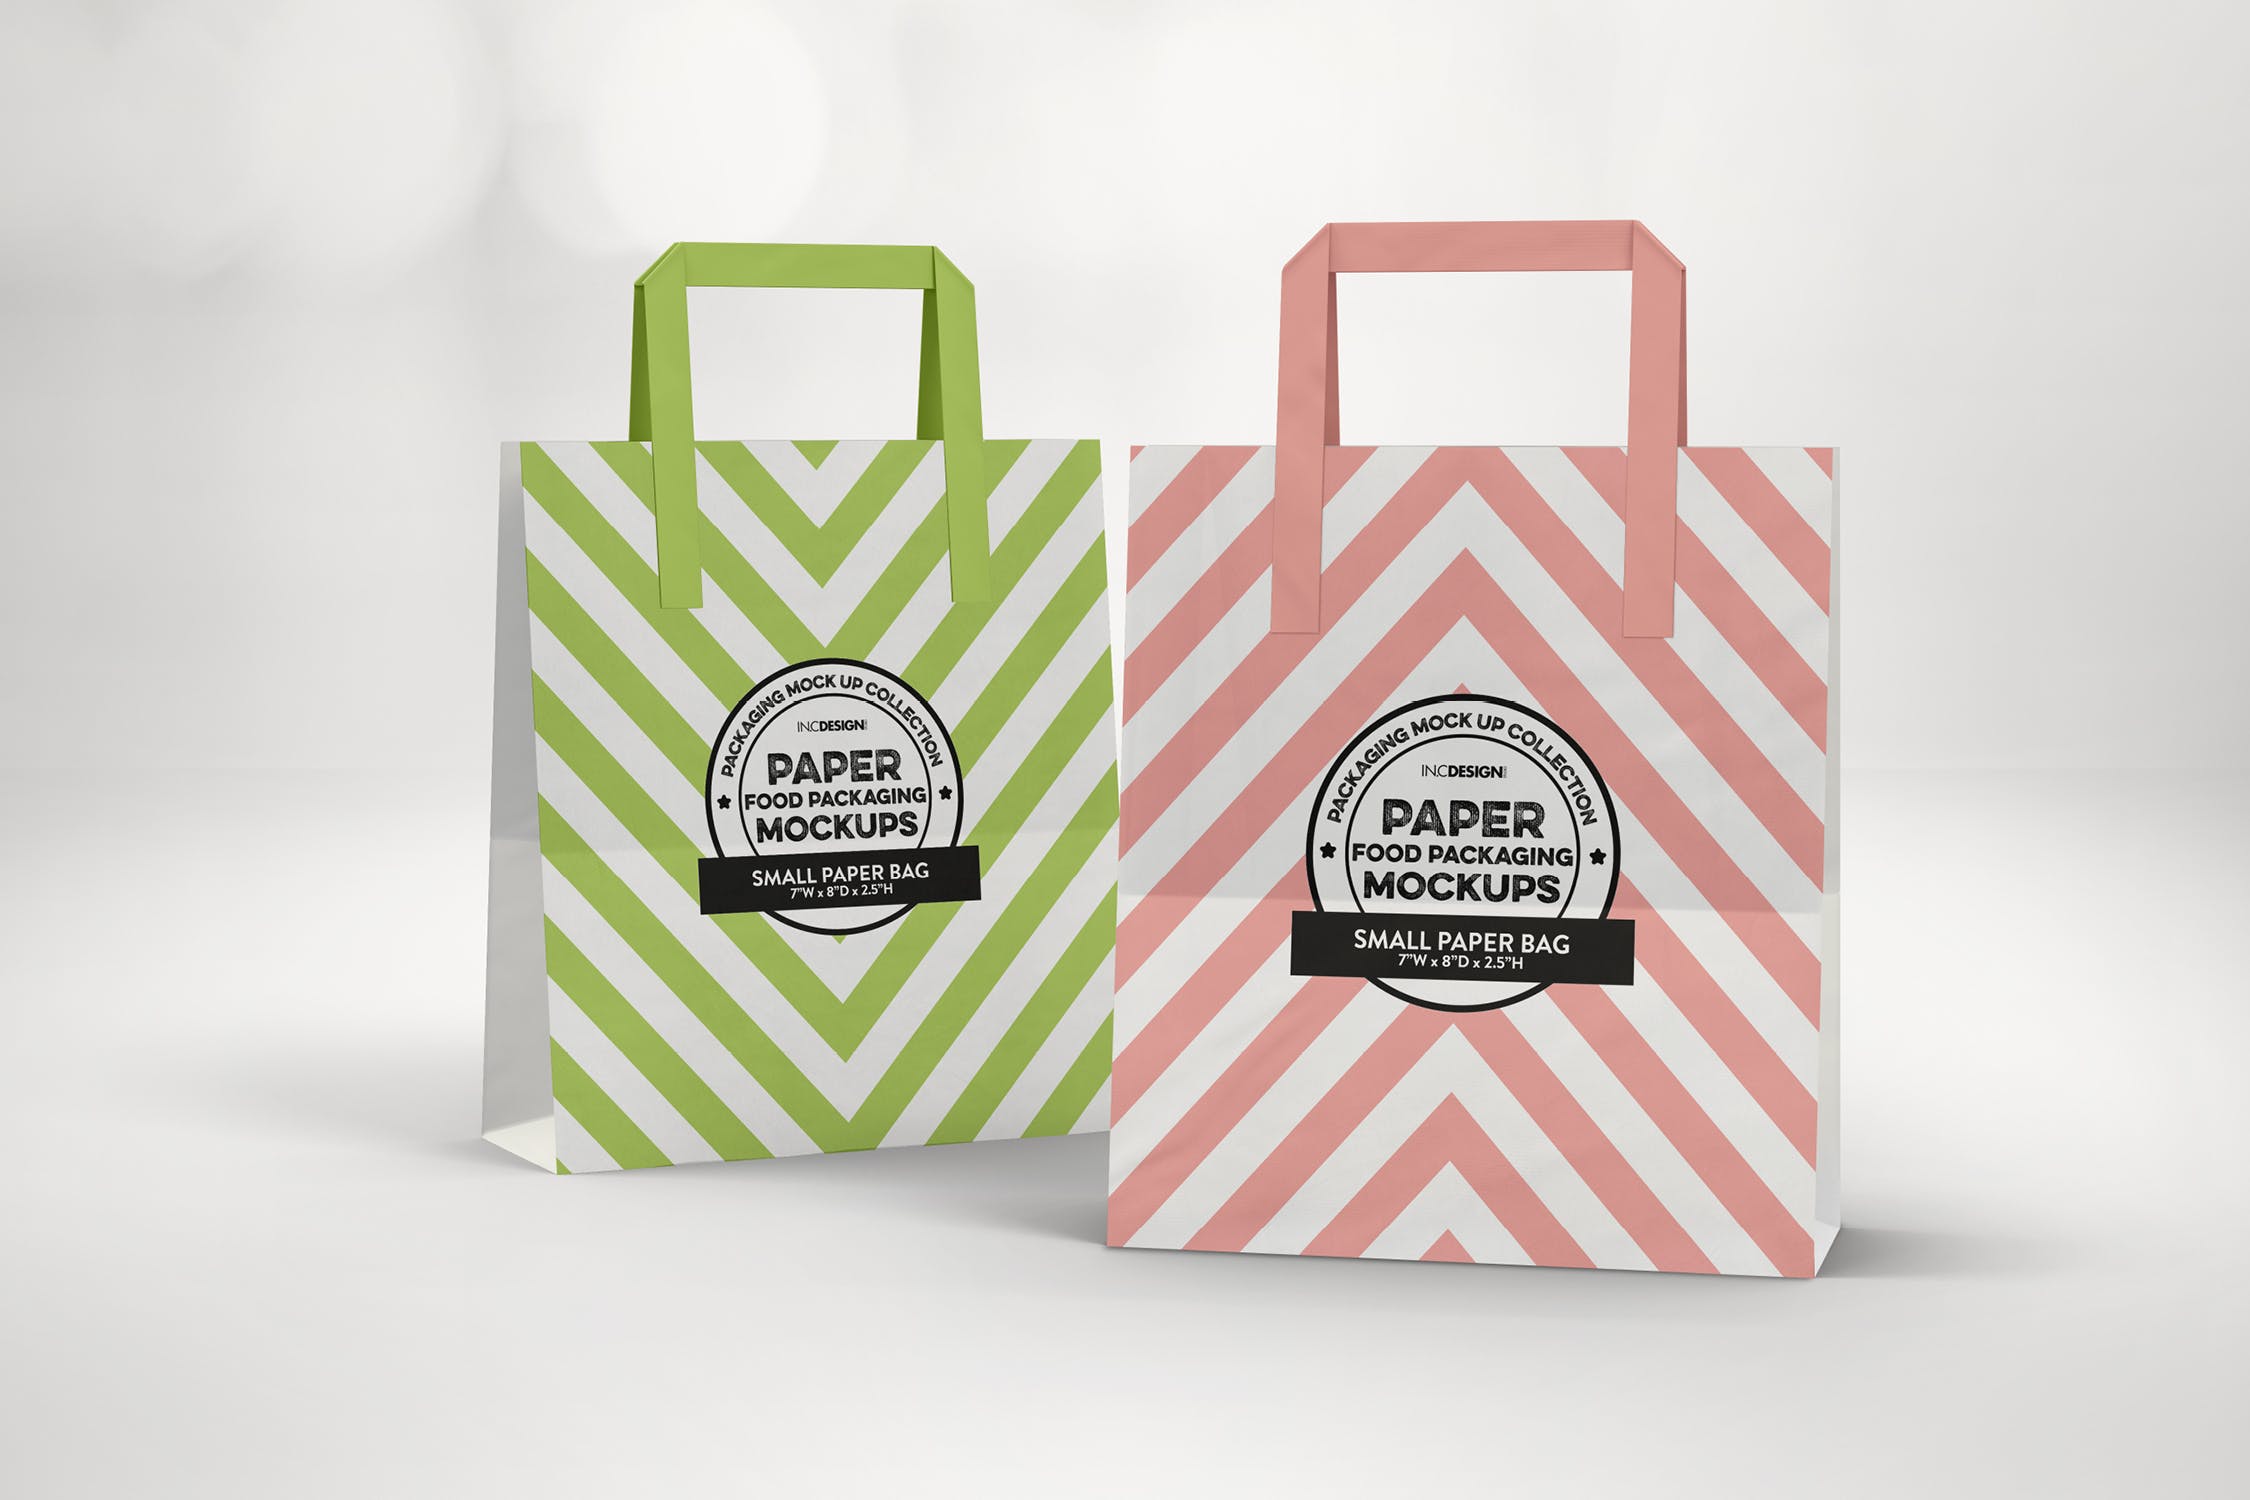 购物纸袋外观设计效果预览蚂蚁素材精选 Small Bags with Flat Handles Packaging Mockup插图(1)